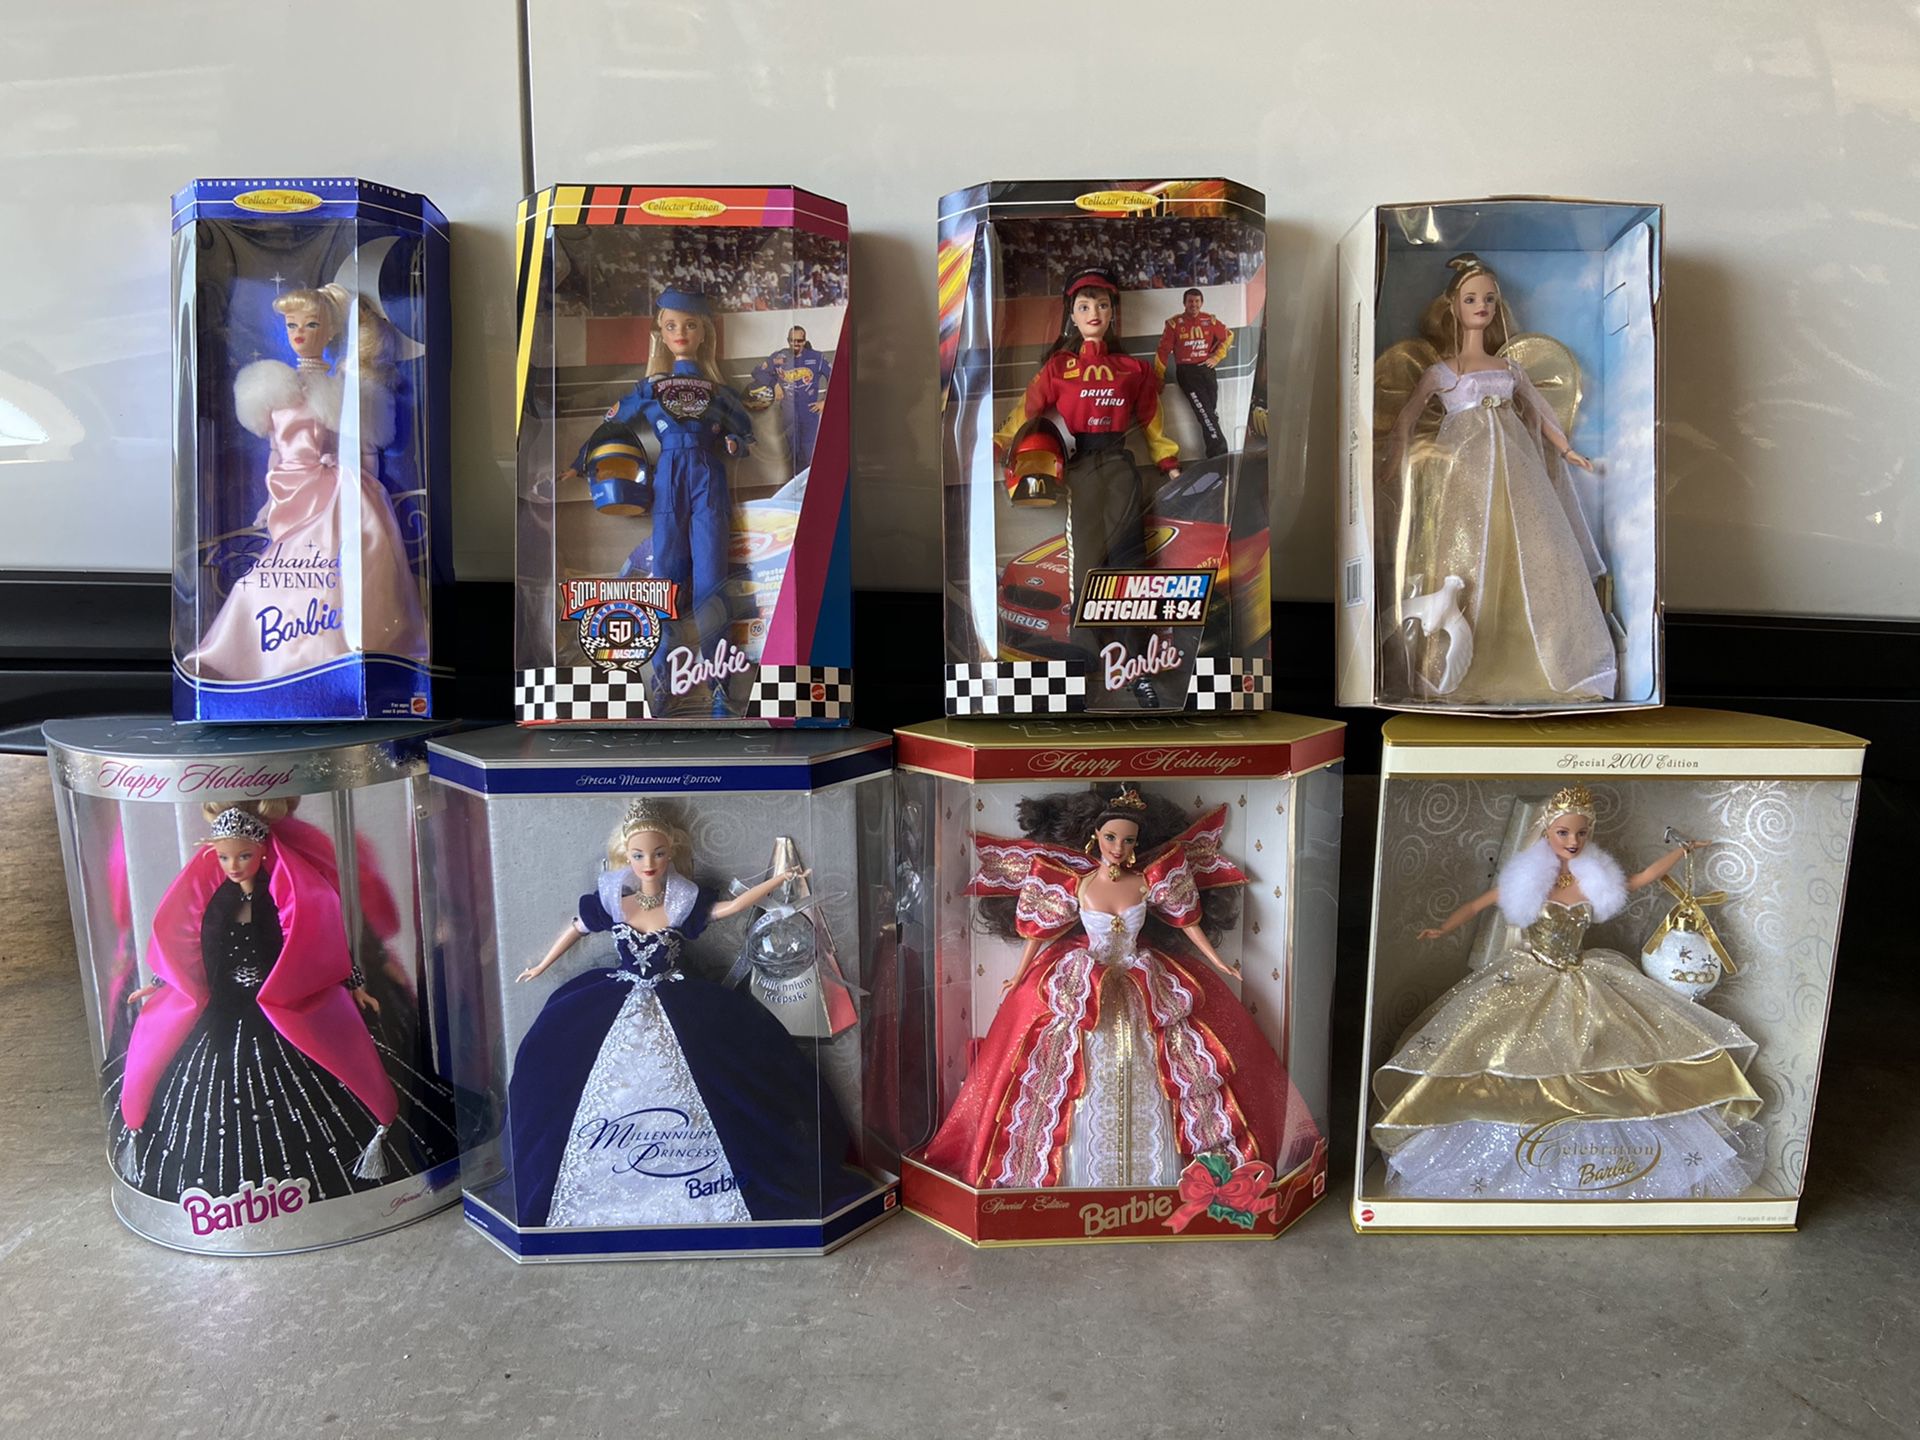 Lot of 8 Vintage Mattel Barbie Dolls BRAND NEW in boxes